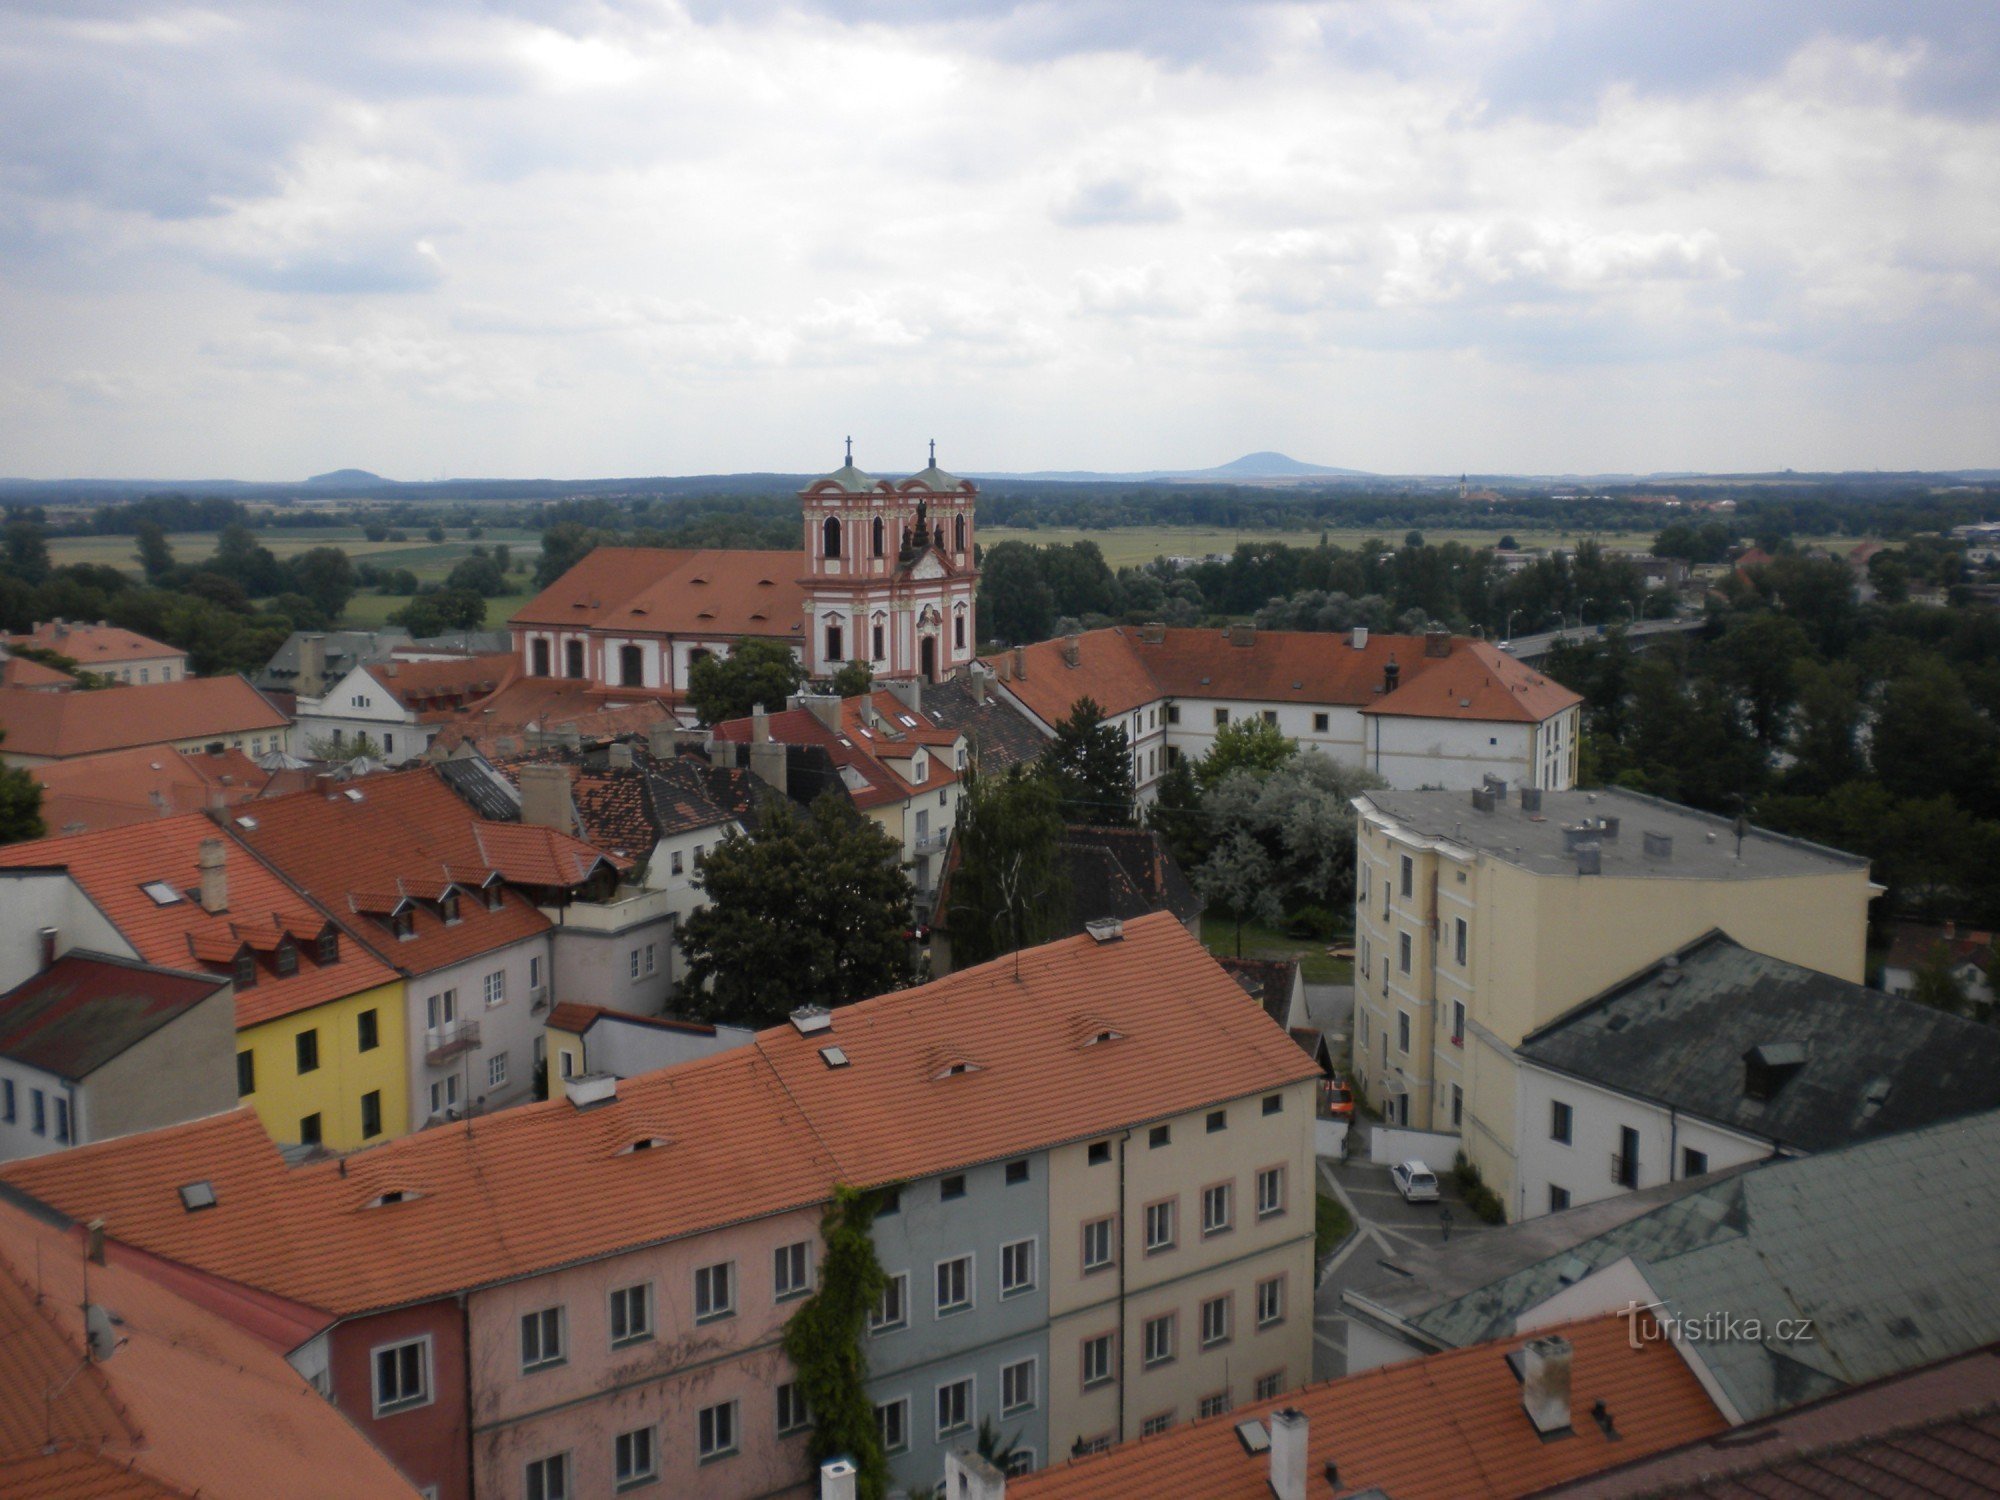 Historic buildings of the city of Litoměřice.